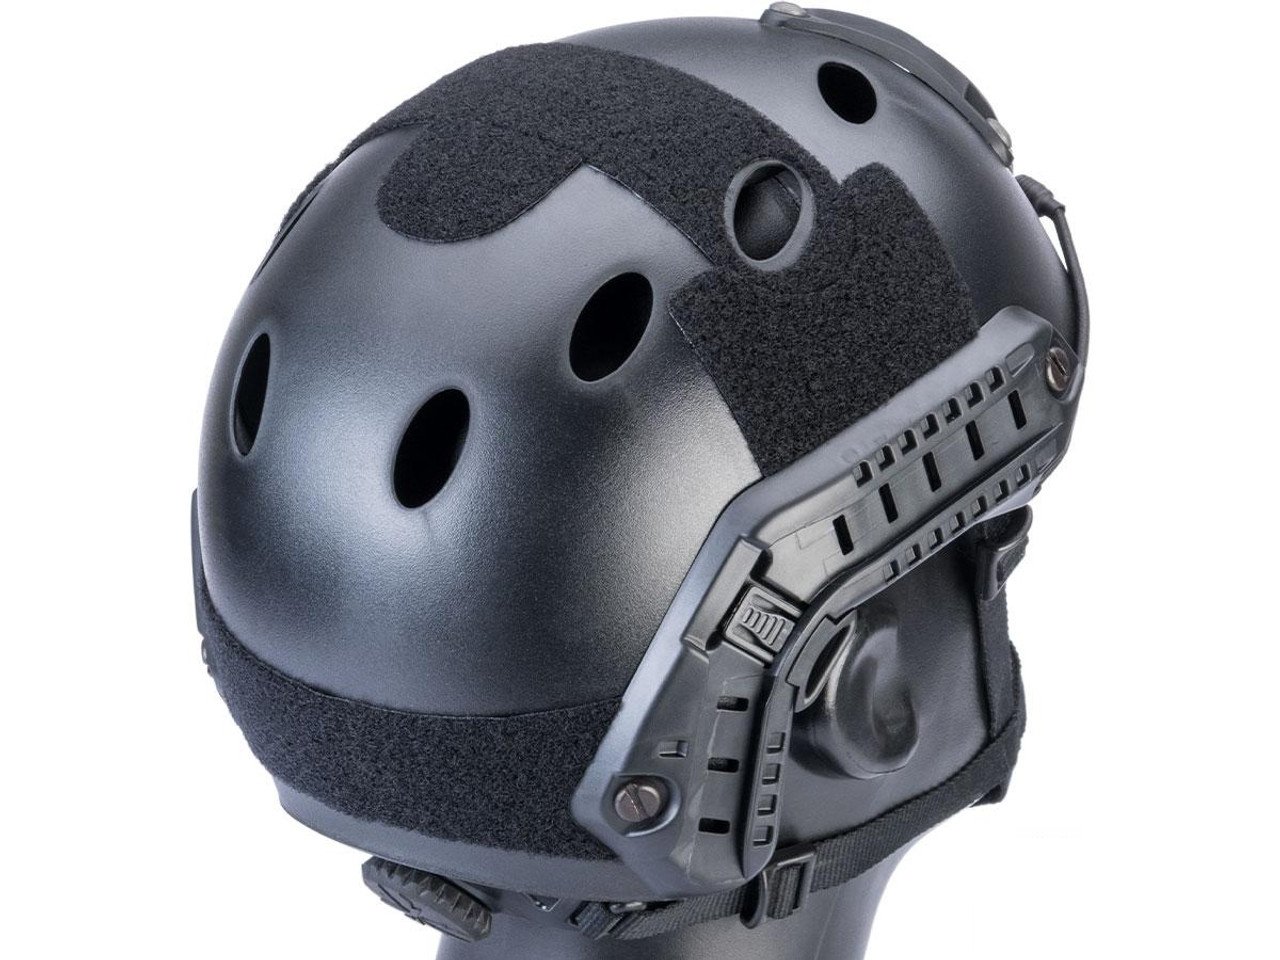 Emerson Advanced PJ Type Tactical Airsoft Bump Helmet